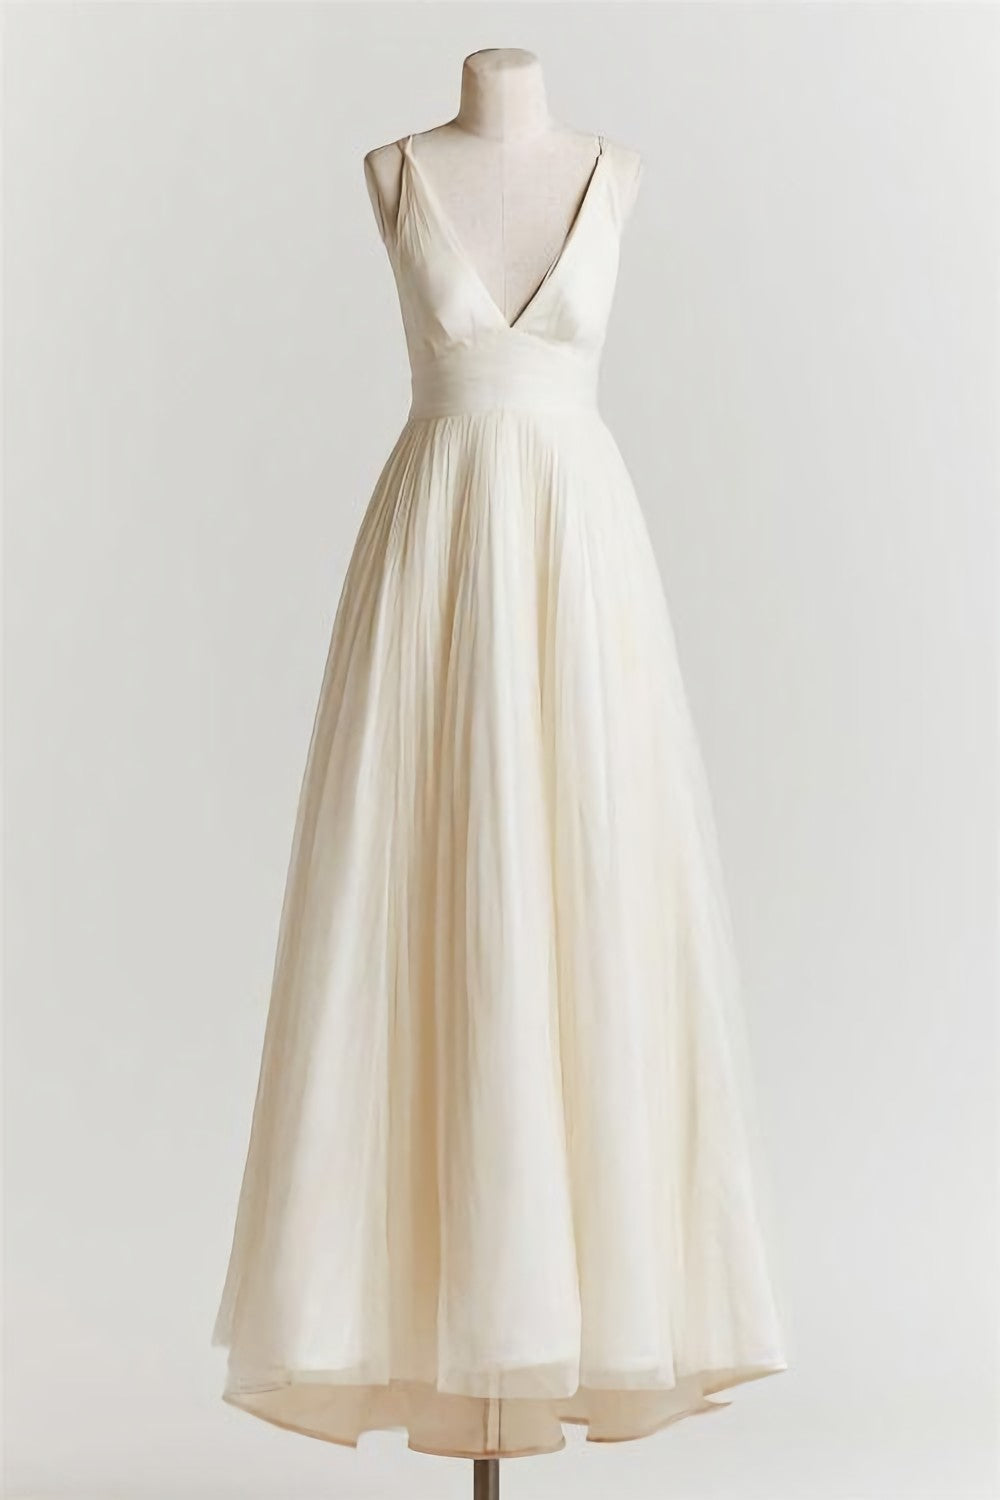 Deep V Neck Prom Dress, White Prom Dress, Fashion Prom Dress, Sexy Party Dress, Custom Made Evening Dress